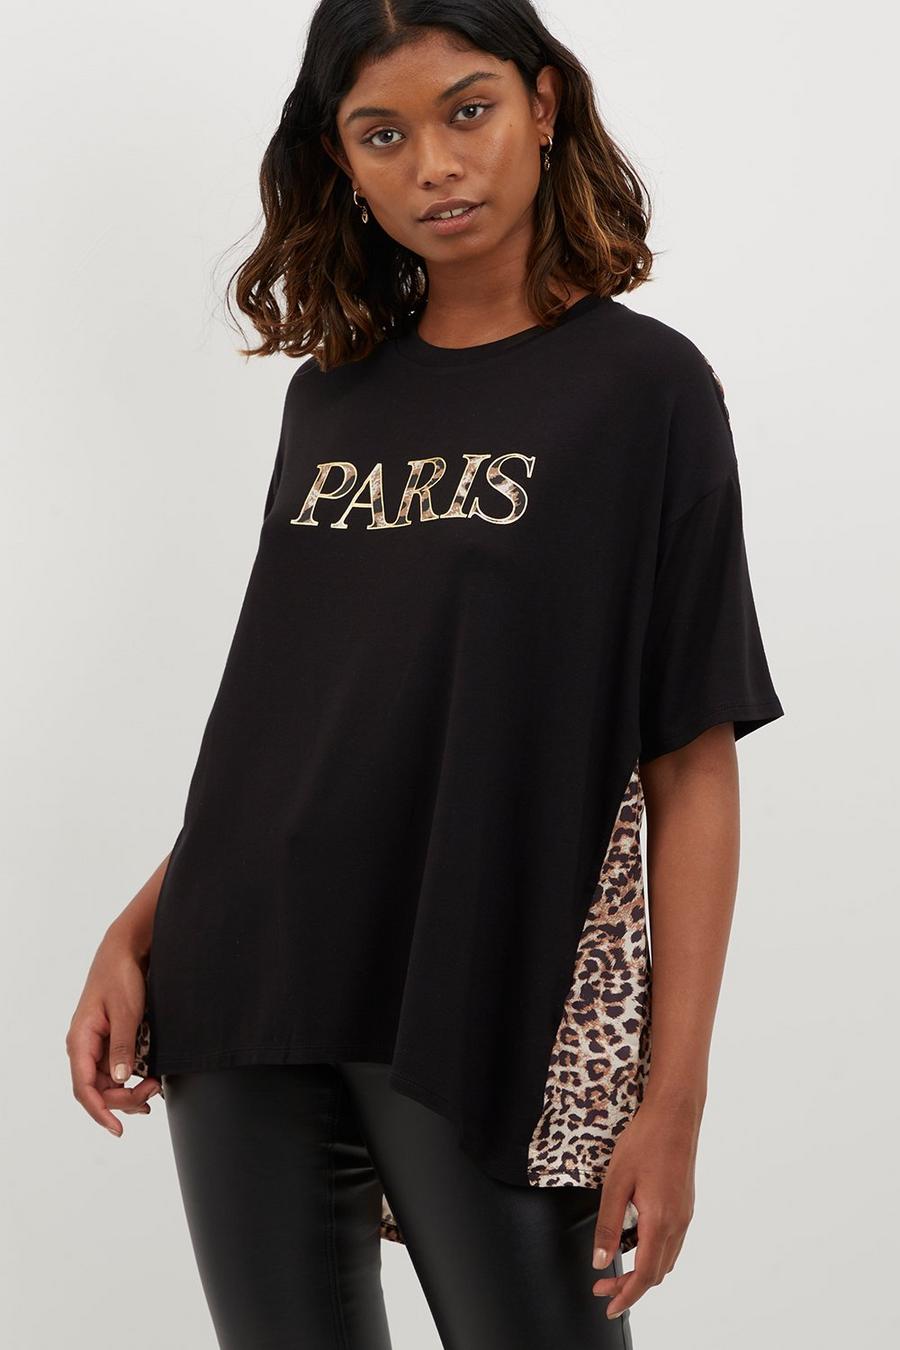 Paris Leopard Jersey and Chiffon Mix T Shirt